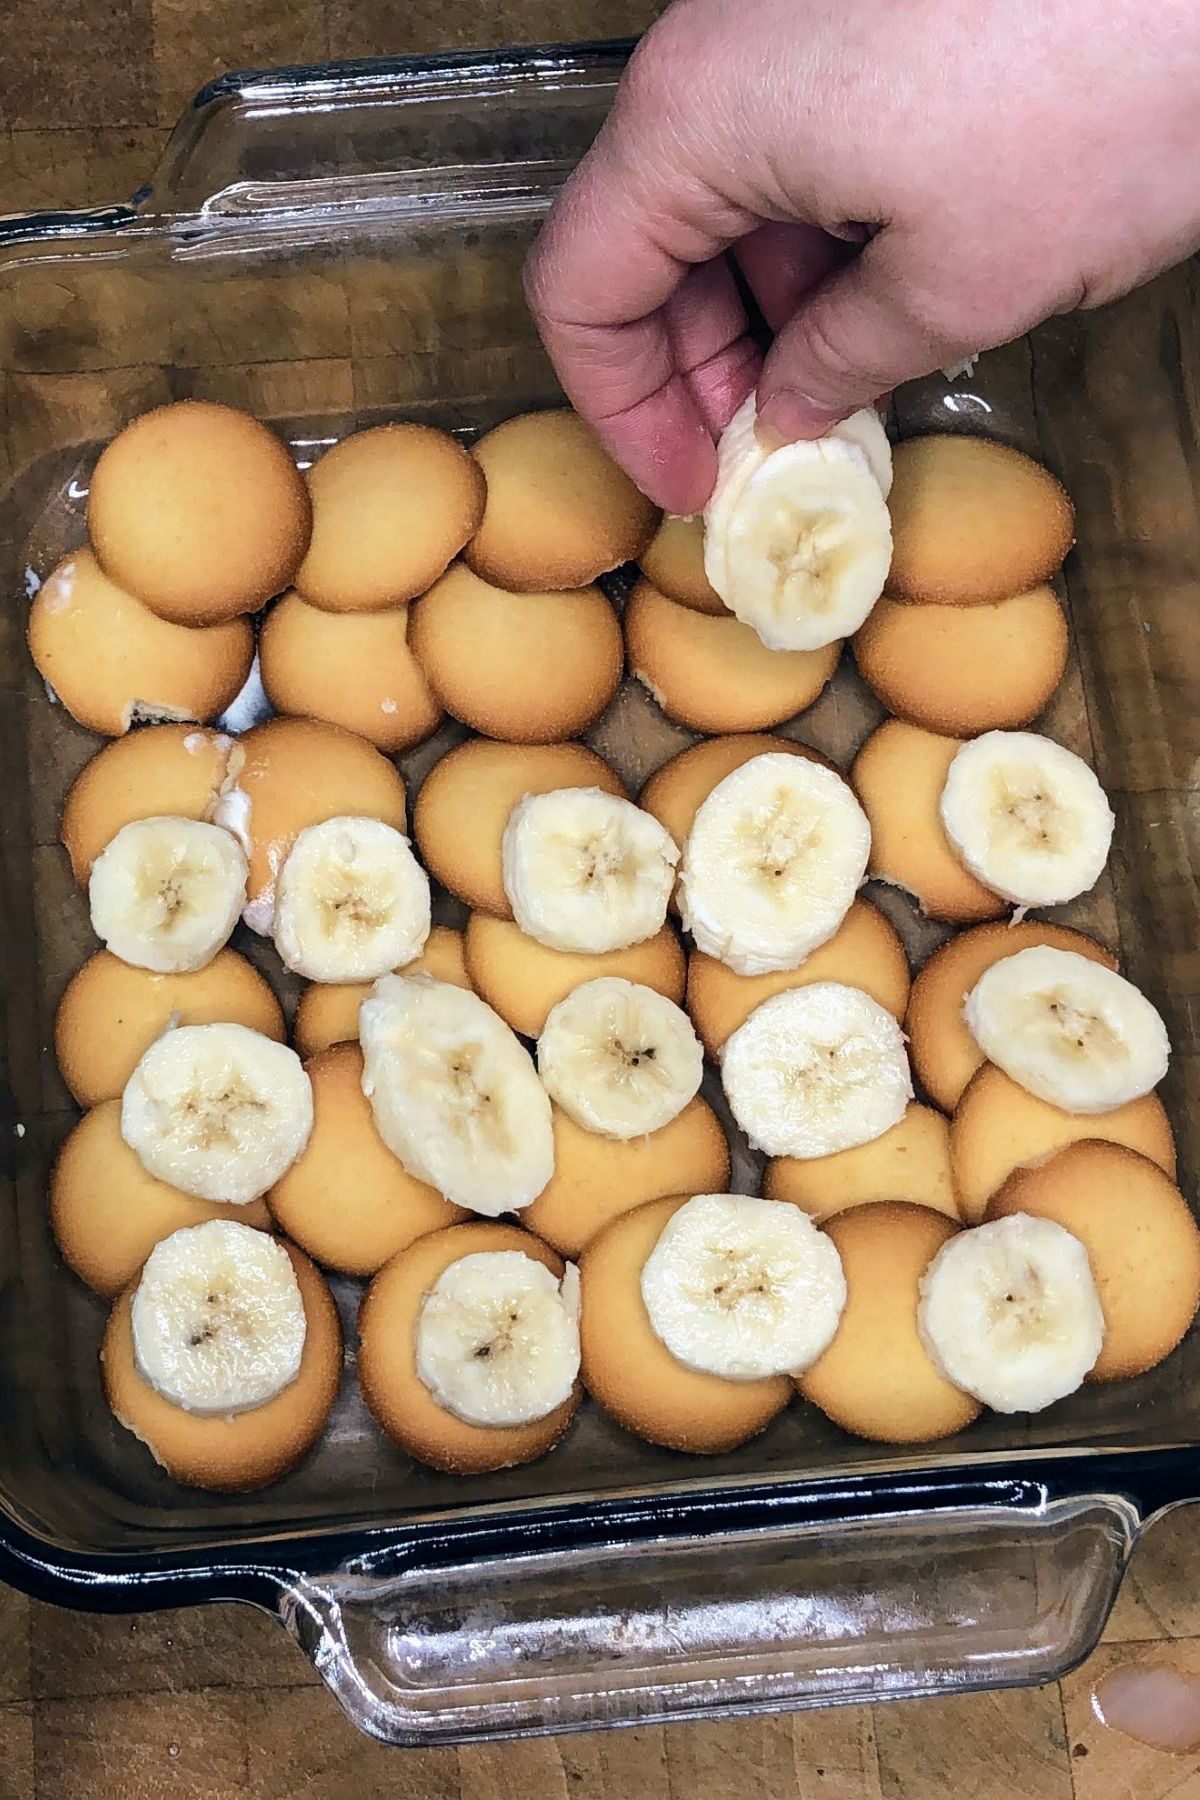 Placing banana slices on nilla wafers.